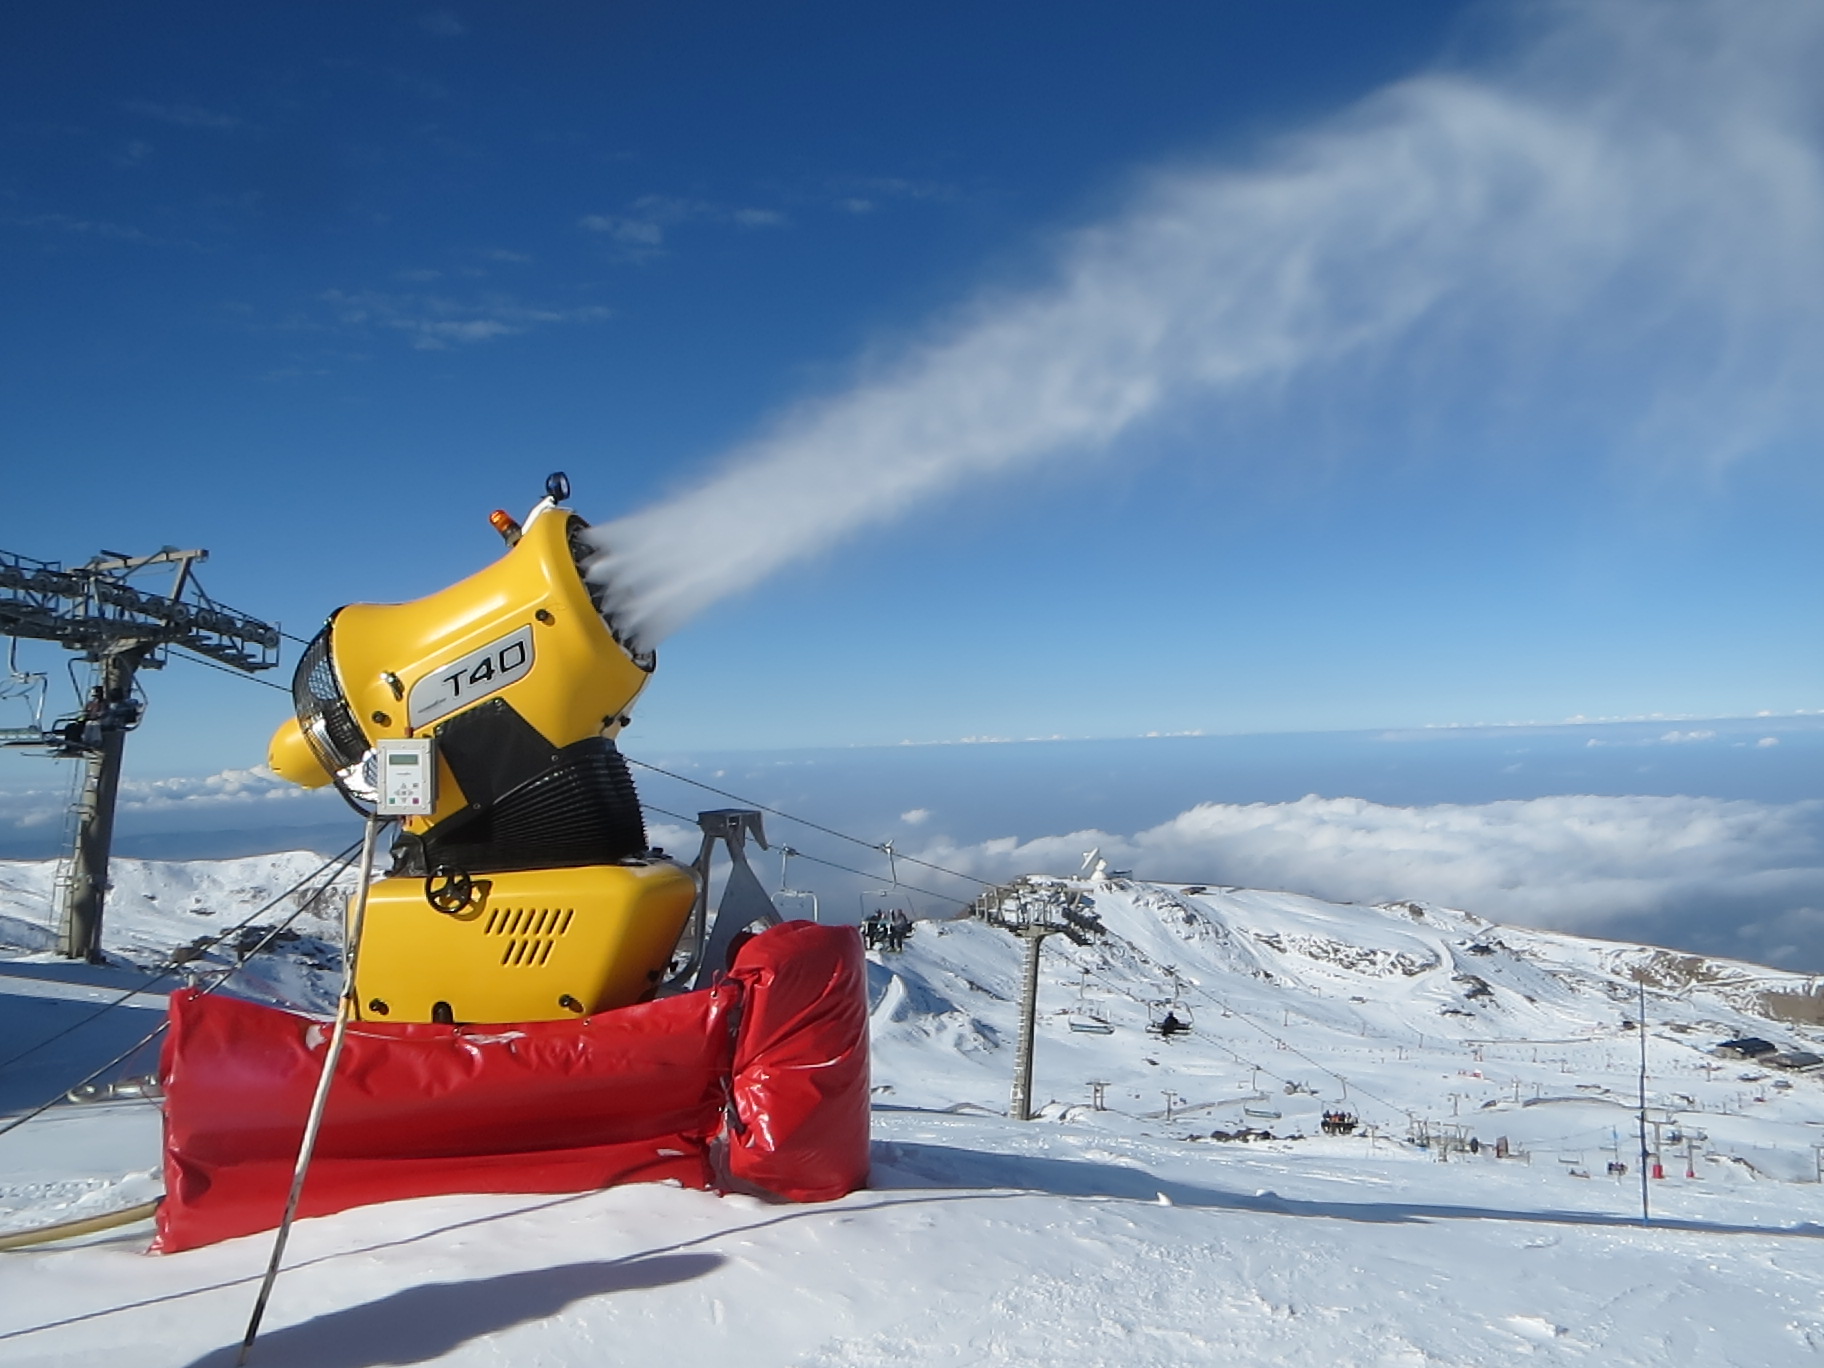 Jiminy Peak Create Snowmaking “Blizzard” That Can Be Seen On Weather Radar